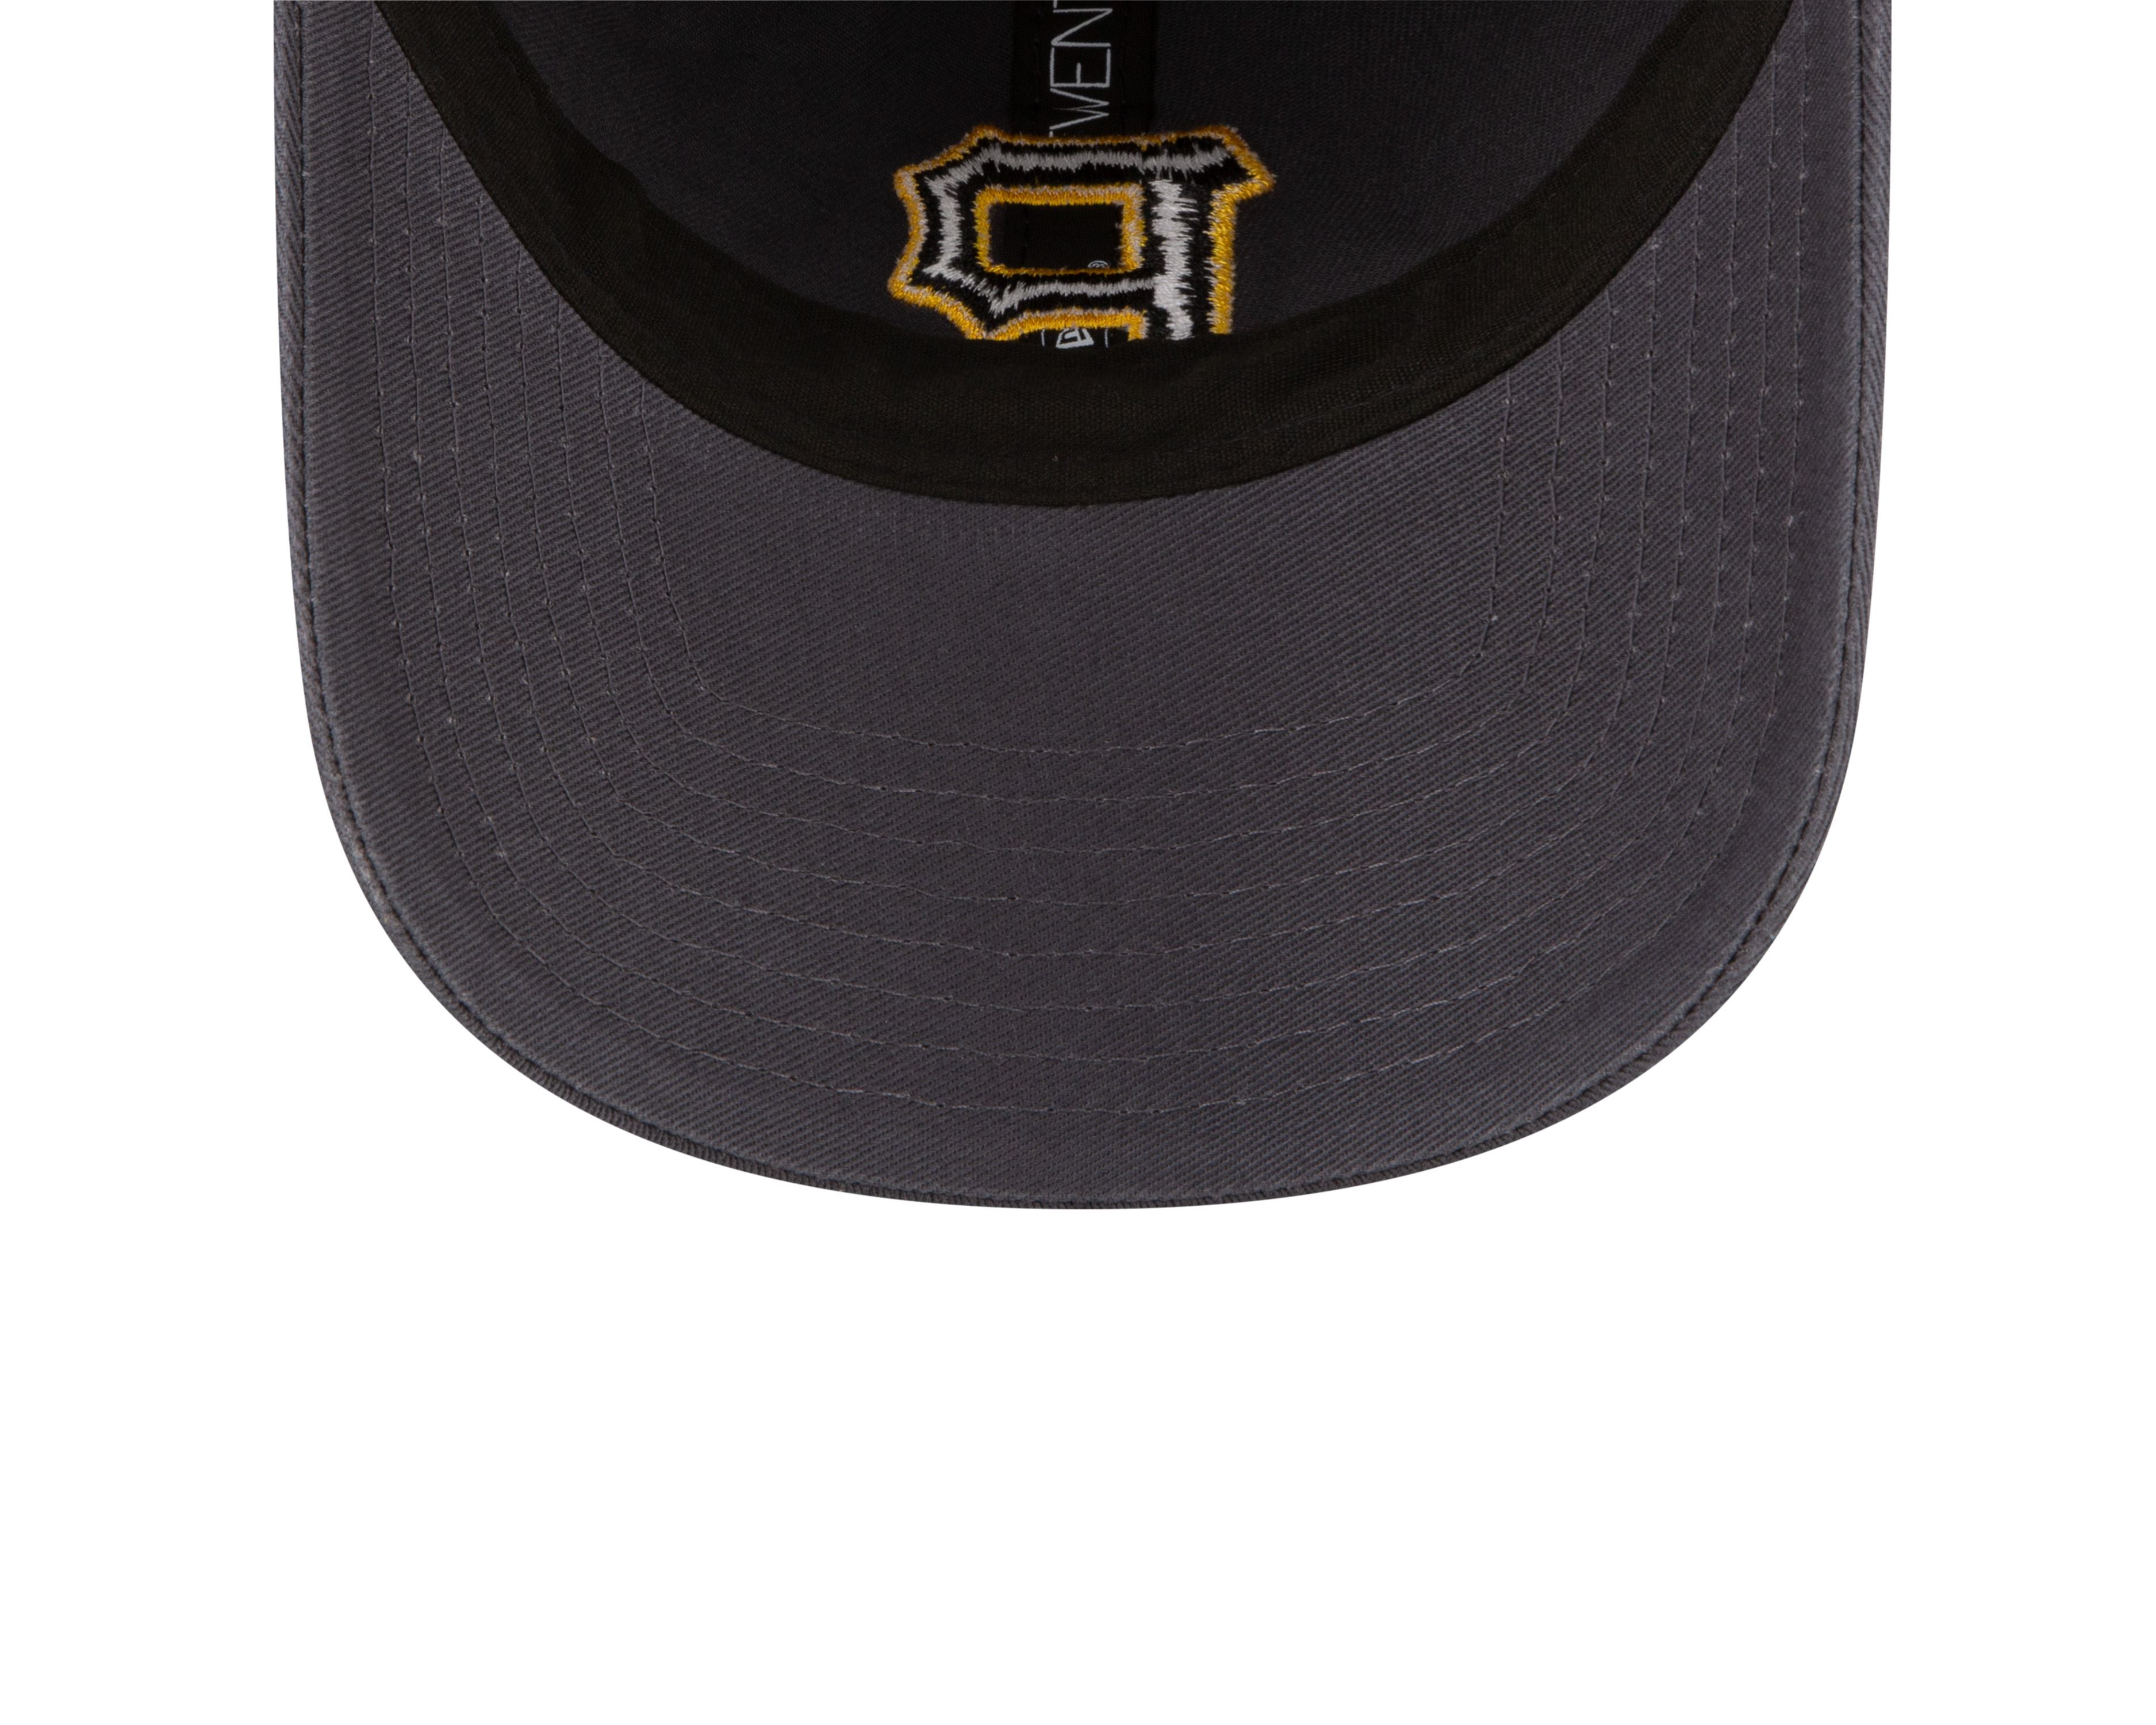 Pittsburgh Pirates MLB Core Classic Grey Adjustable 9Twenty Cap New Era